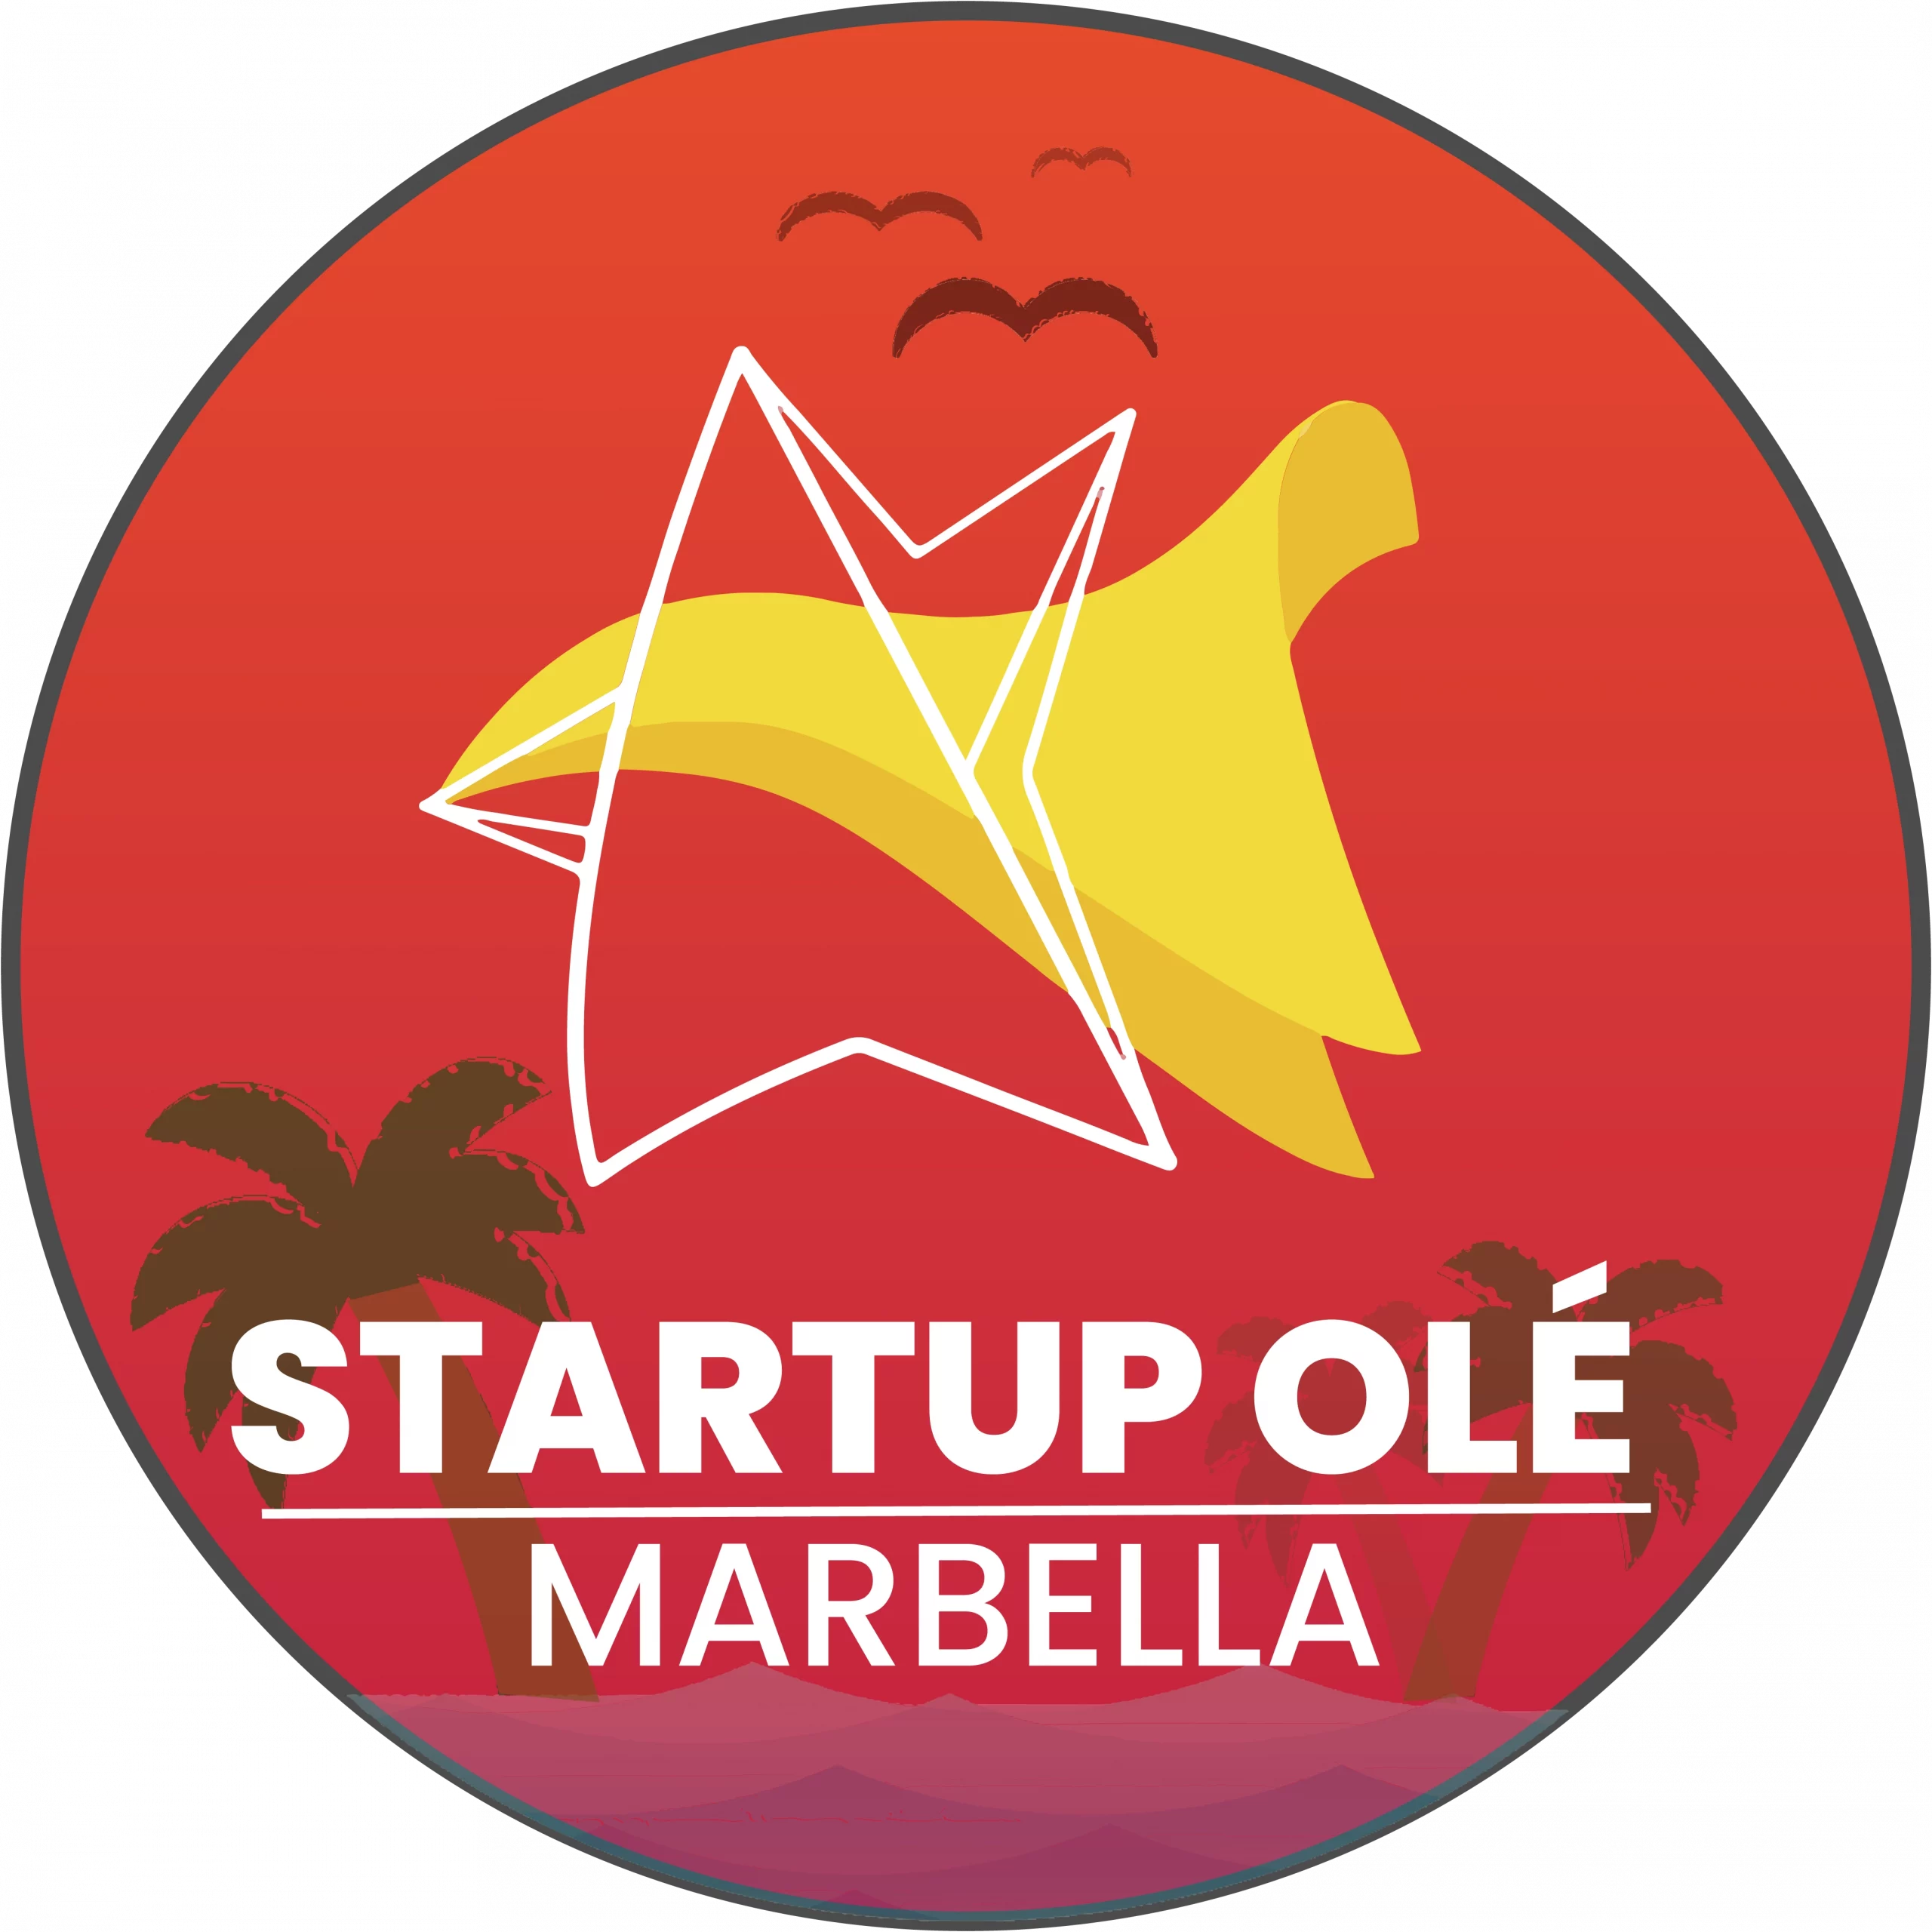 Startup-Ole-Marbella-Logo-copia-1-scaled.webp